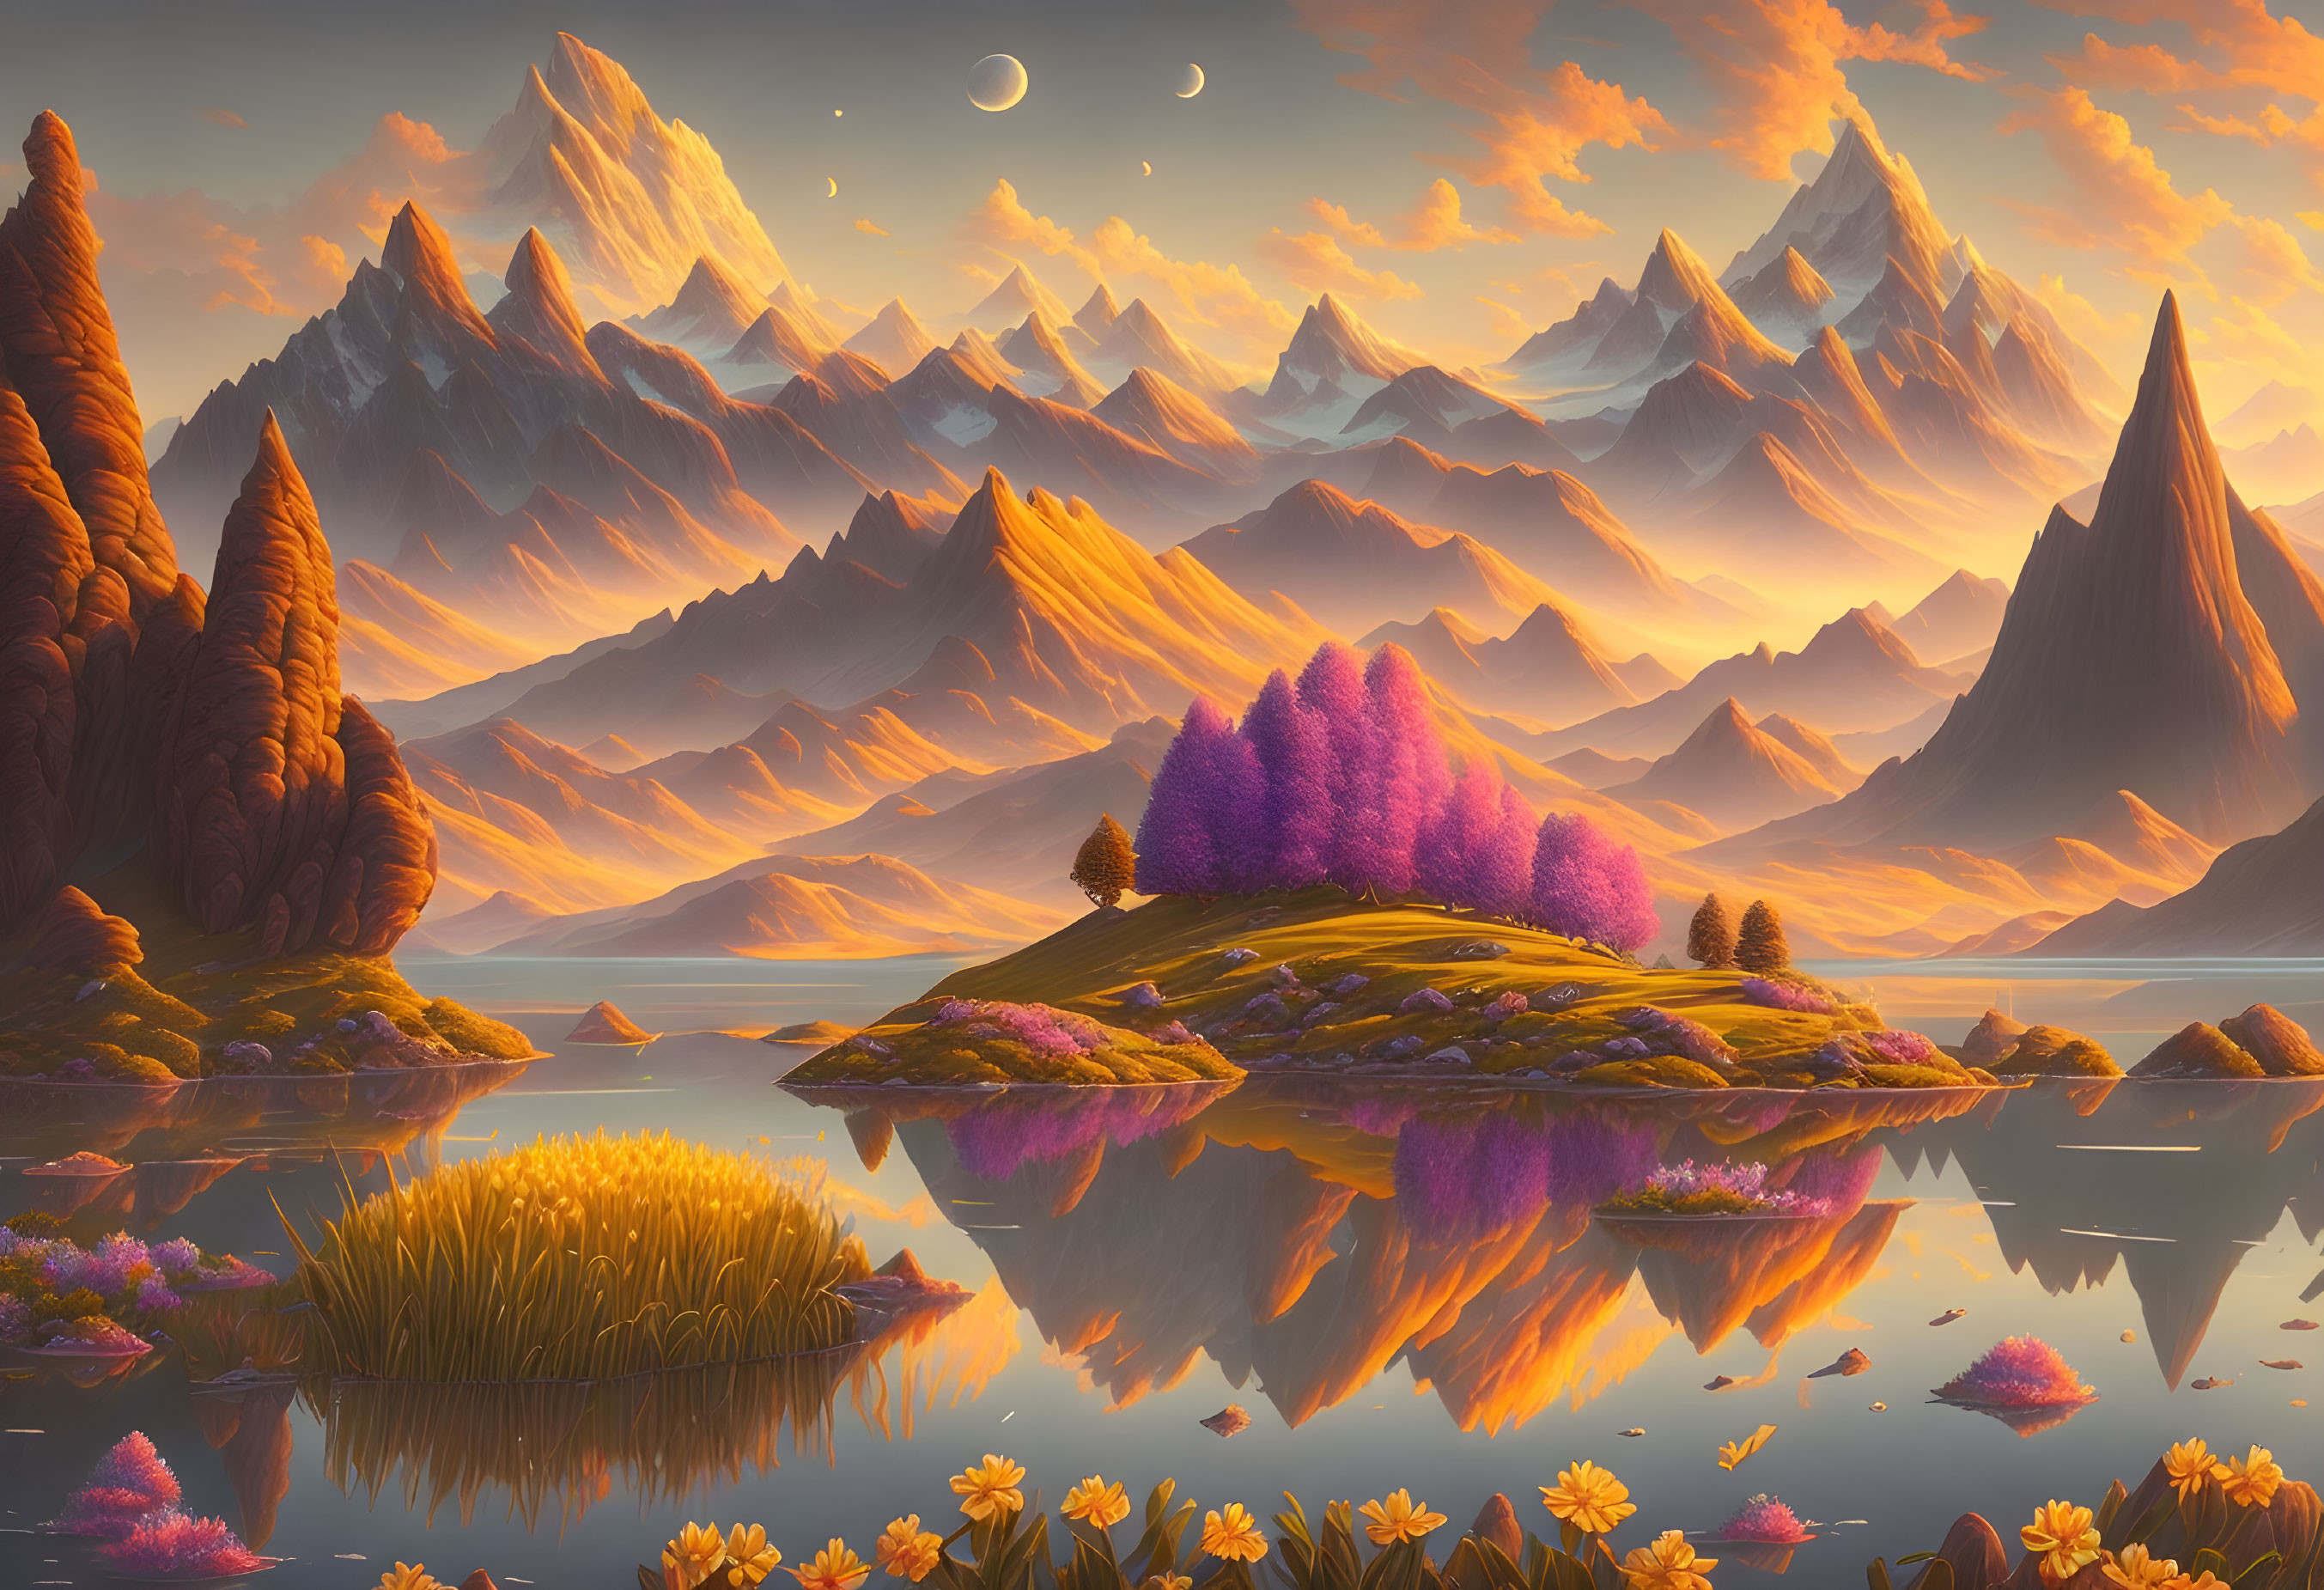 Twilight Oasis: Majestic Mountains & Purple Trees